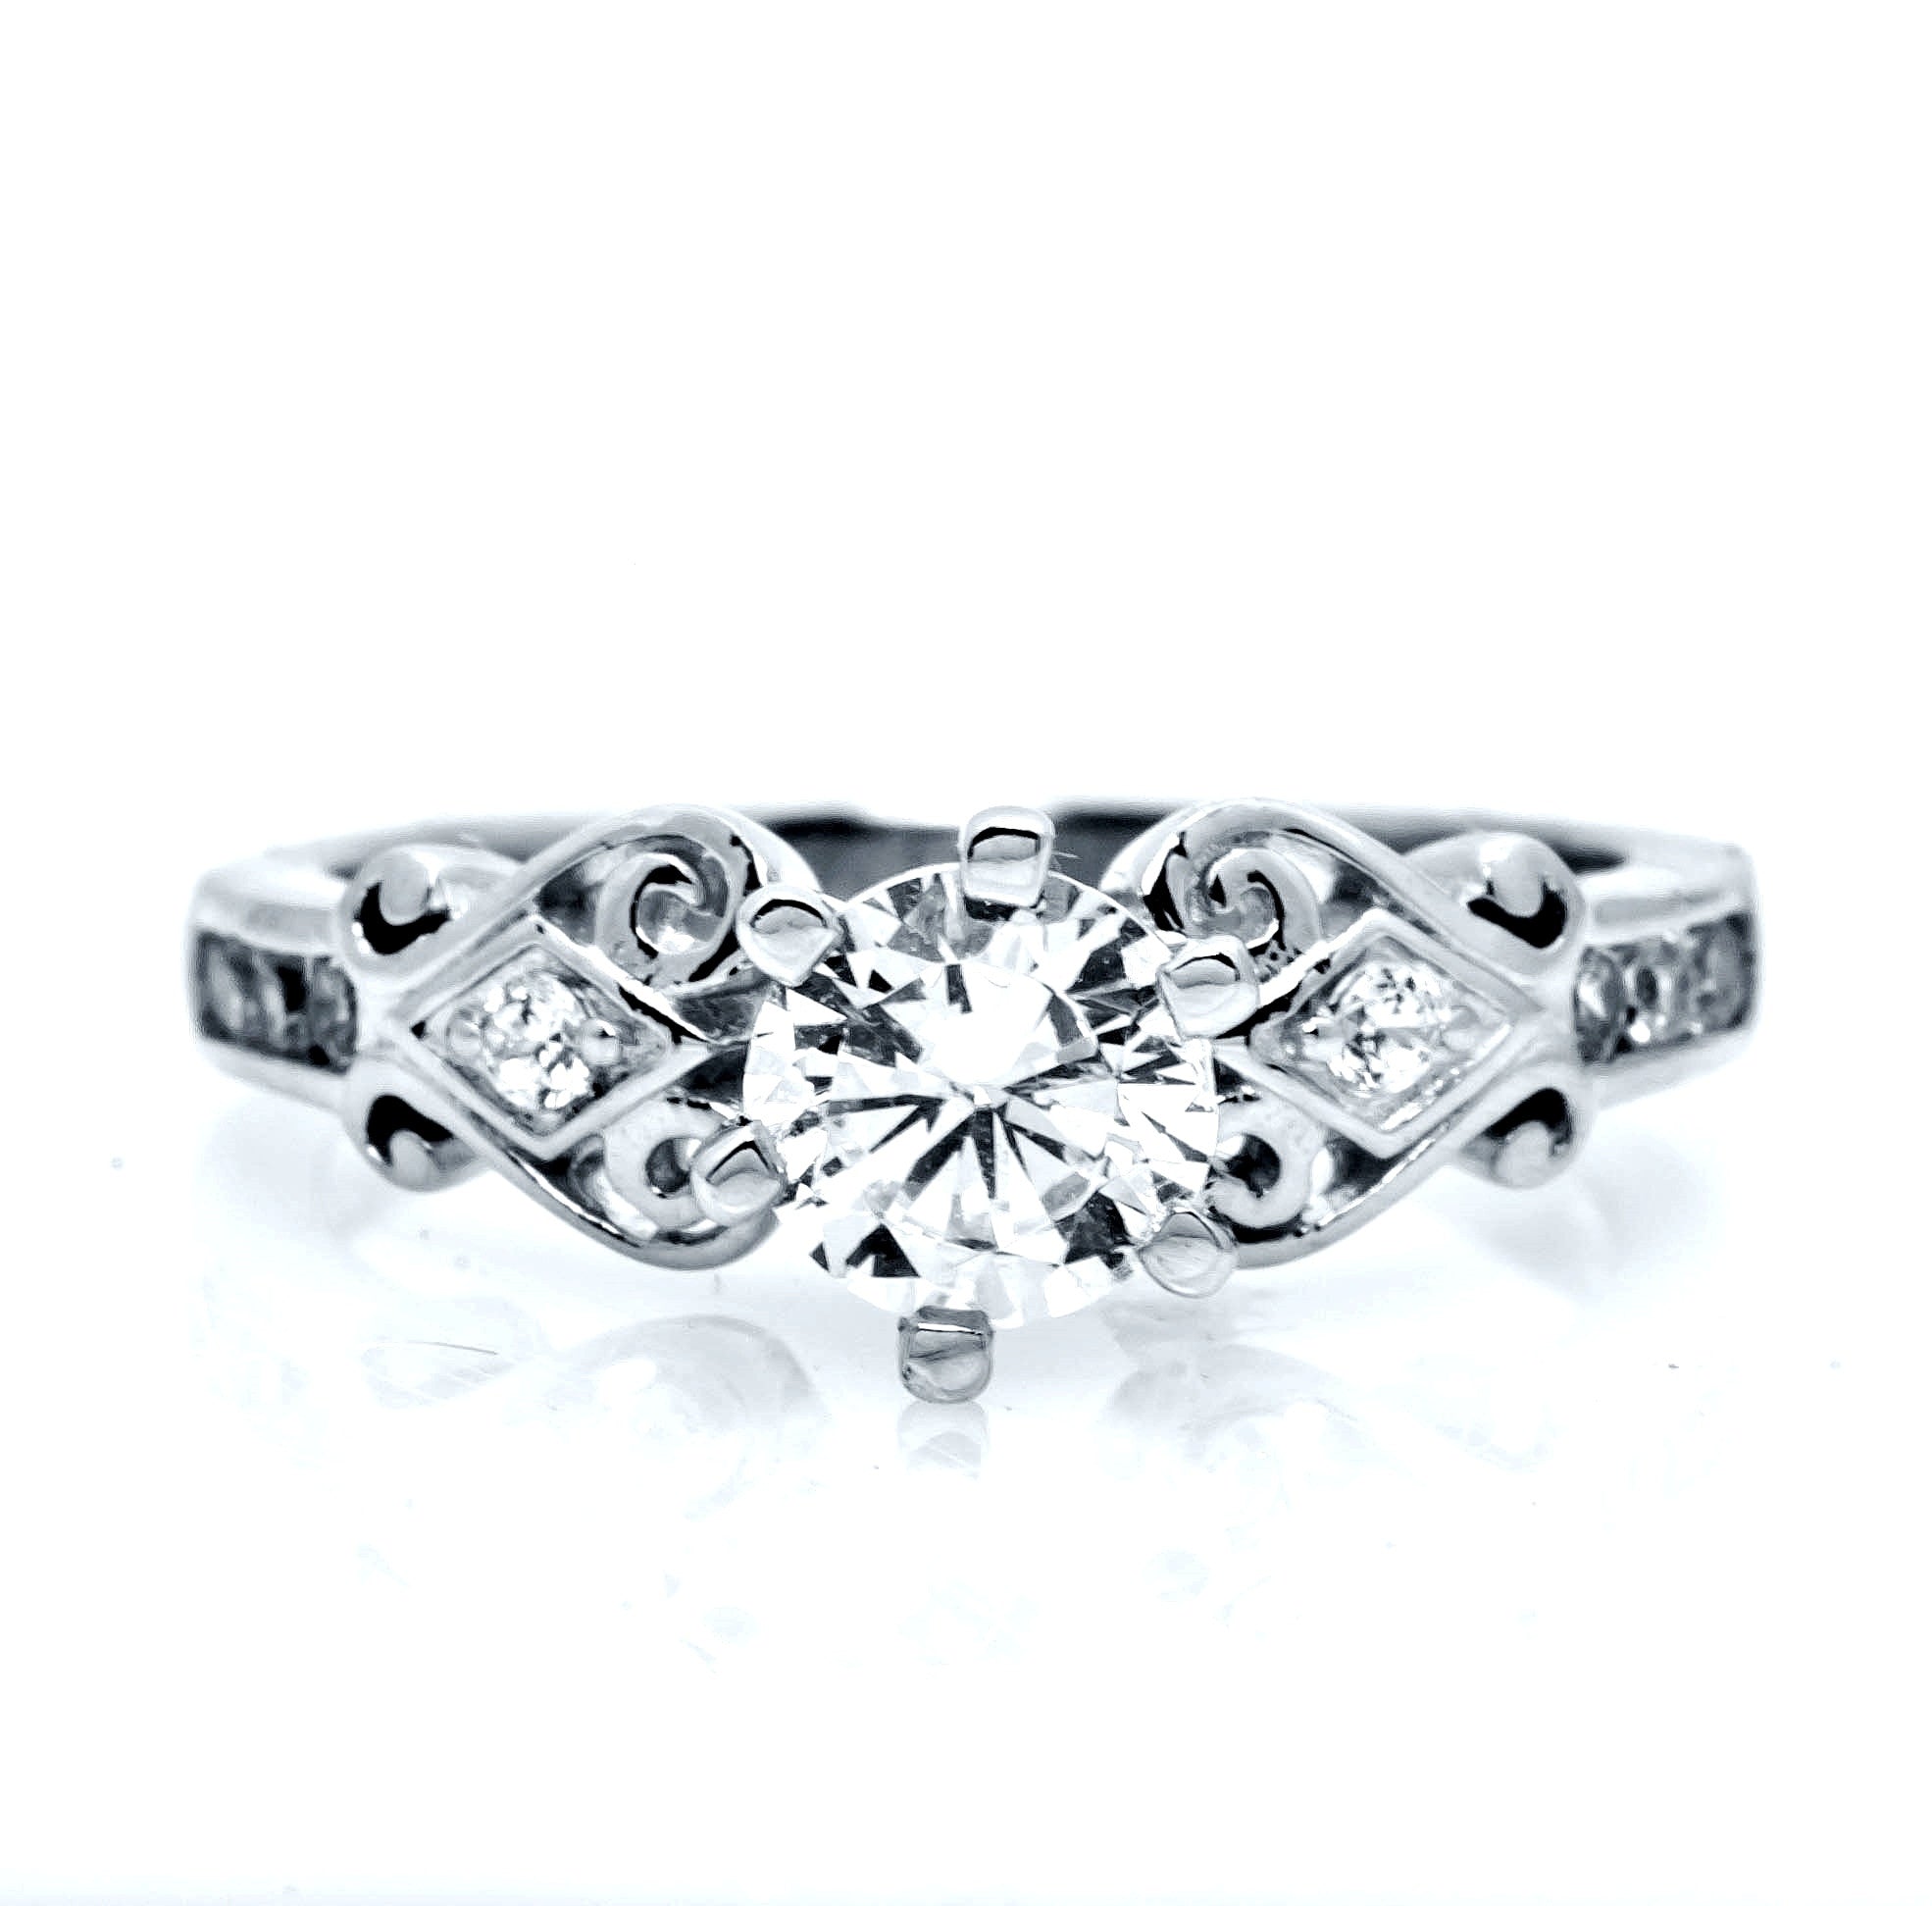 Antique Vintage Design Diamond Engagement Ring, Unique Solitaire .75 Carat GIA Certified Diamond Center Stone & .26 Carat Diamonds, Anniversary Ring - WDY11359